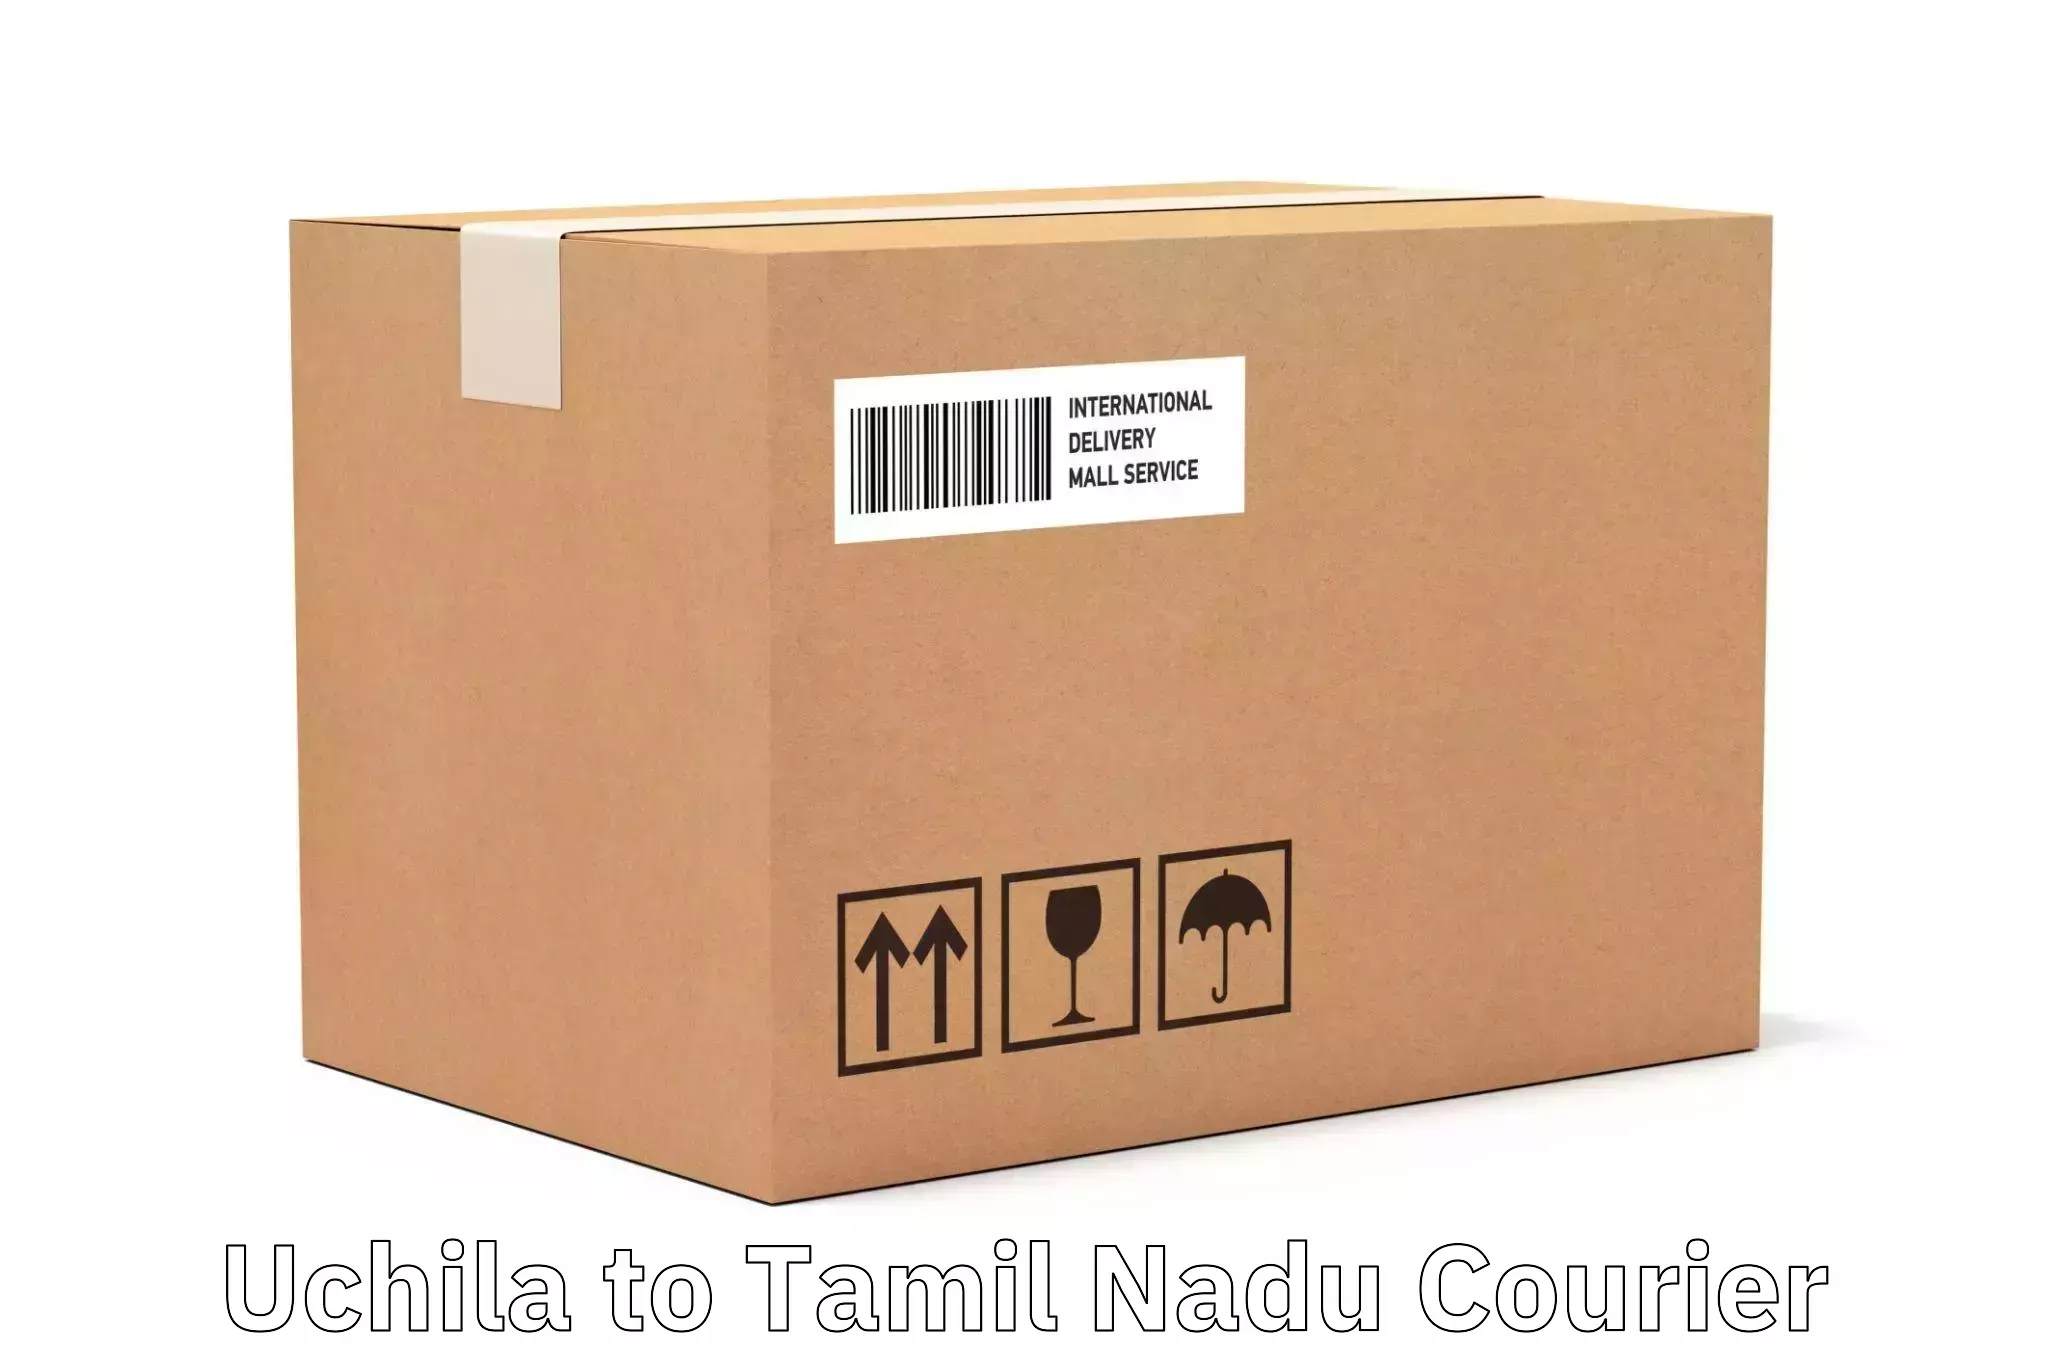 Budget-friendly shipping Uchila to Coimbatore